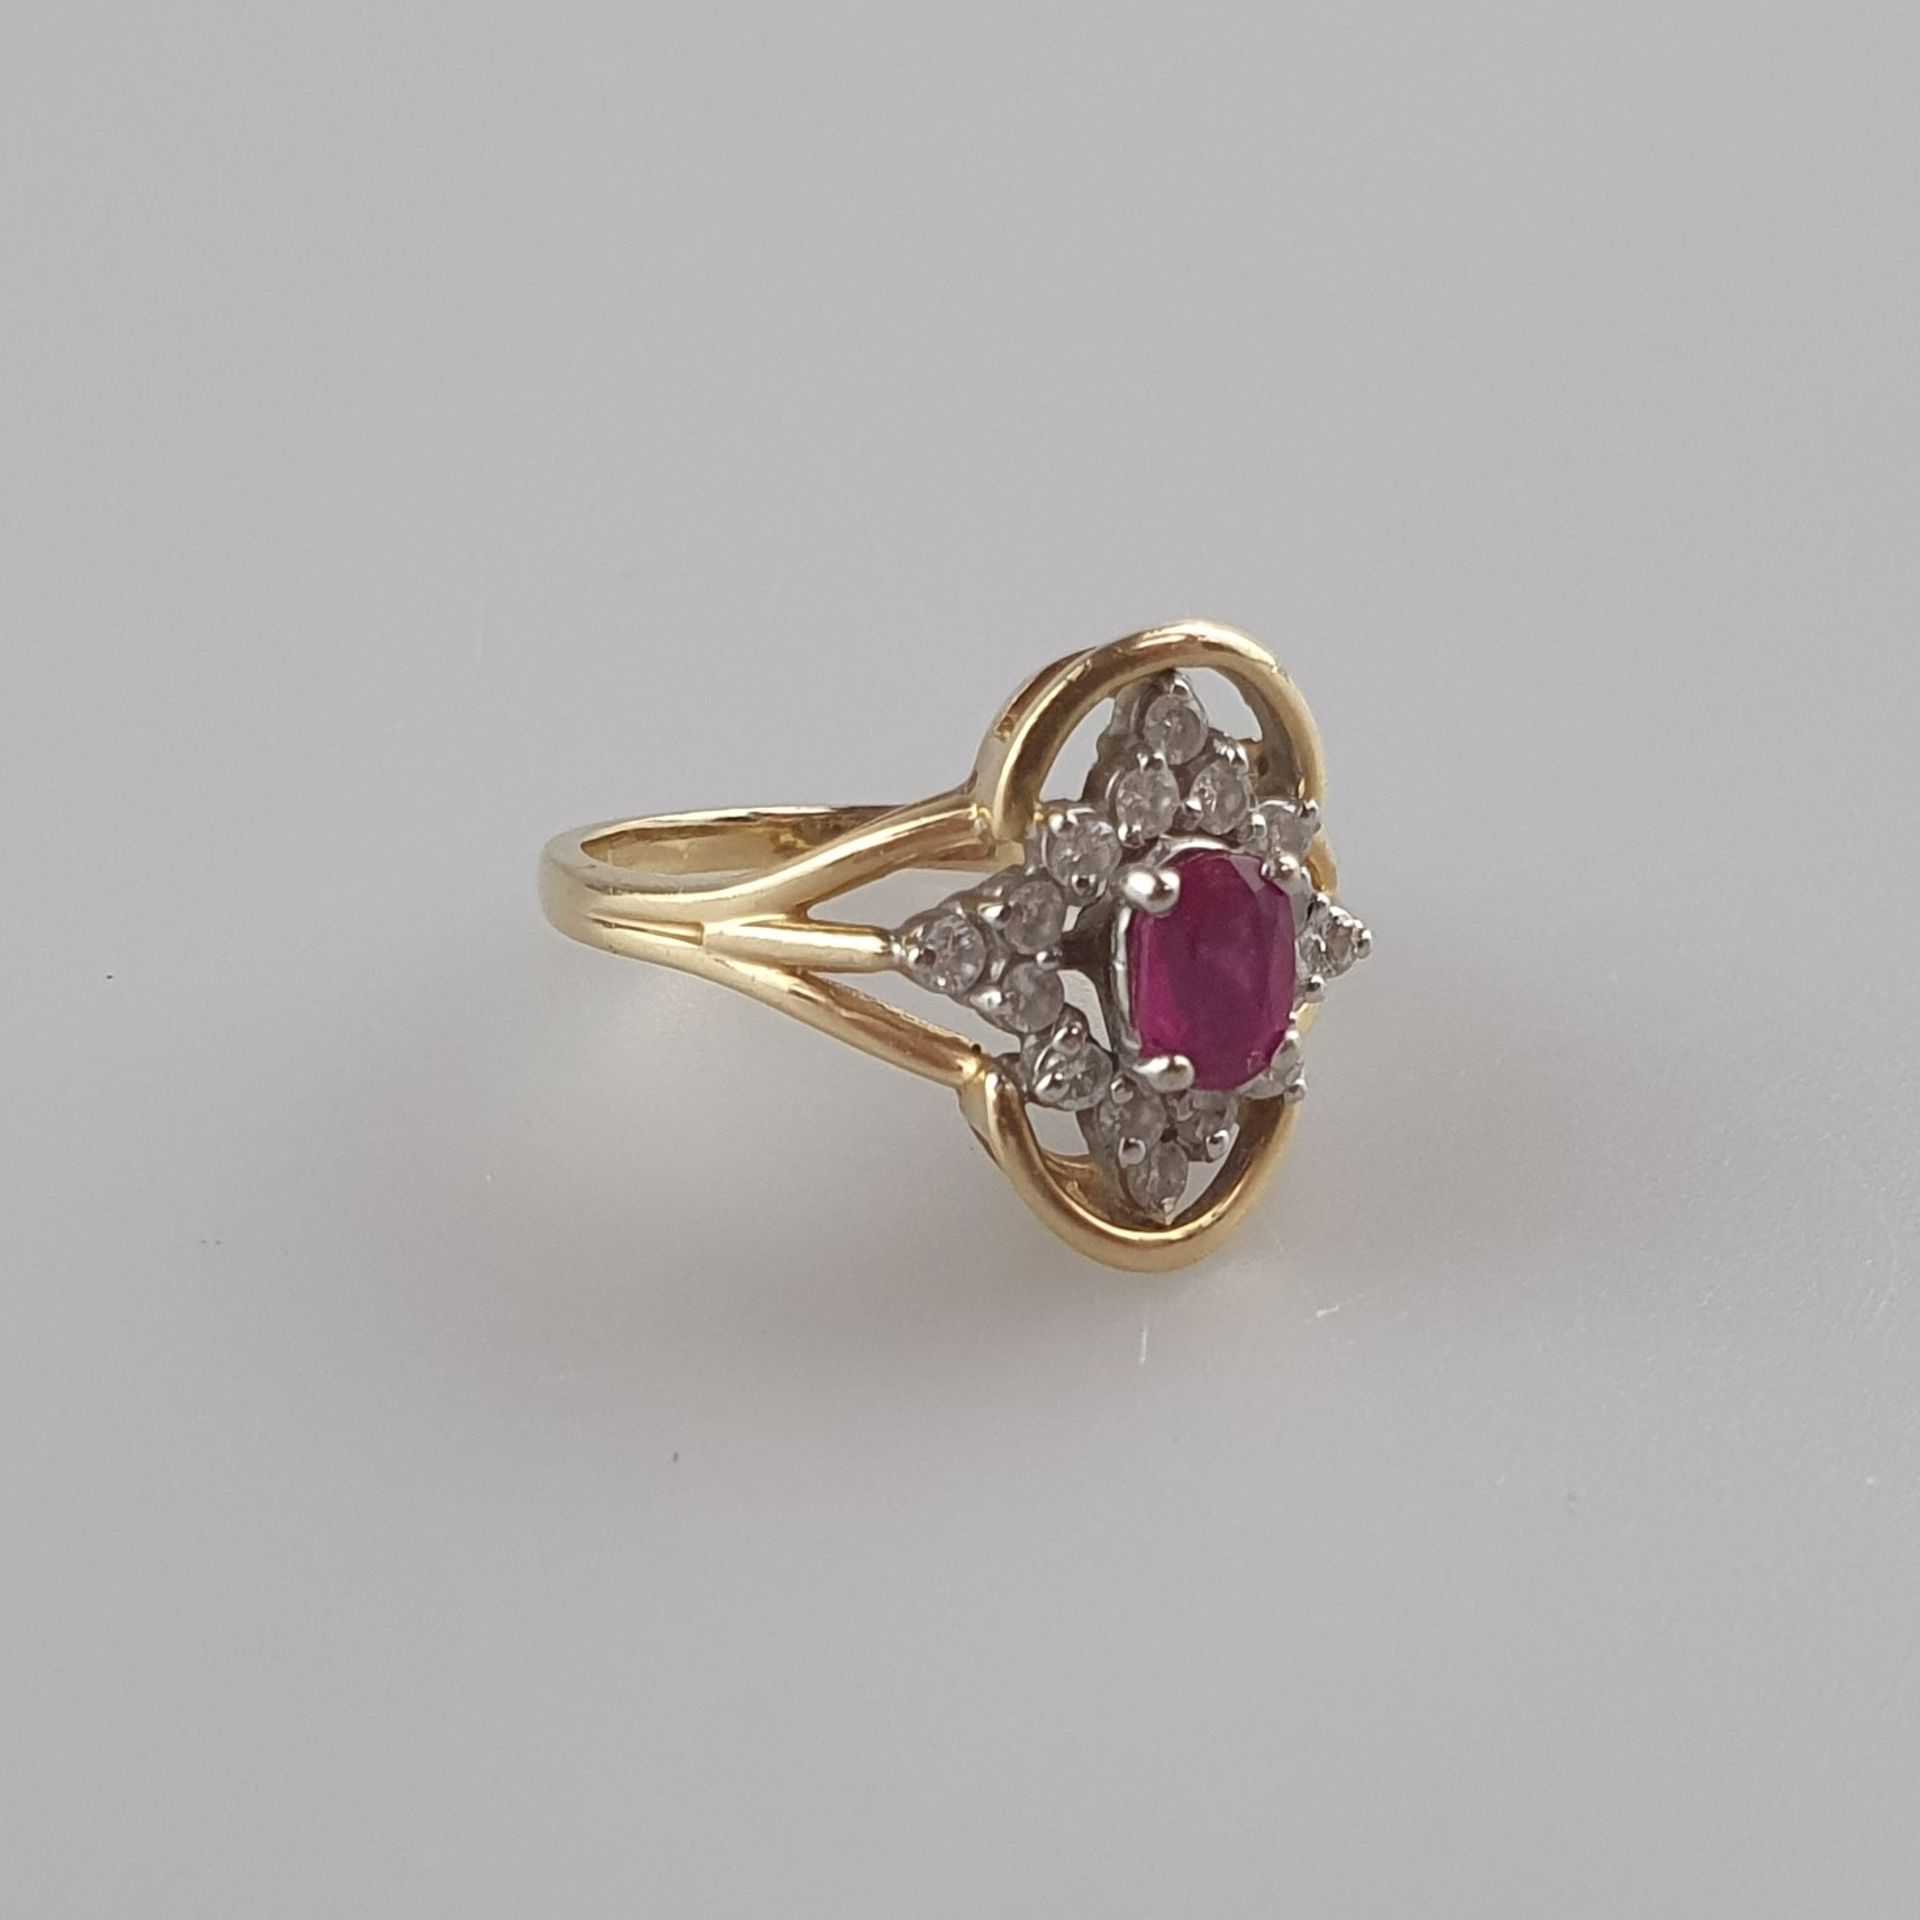 Diamant-Rubin-Ring - Gelbgold 585/000, gestempelt 14K, durchbrochener floraler Ringkopf von ca. 15 - Image 2 of 6